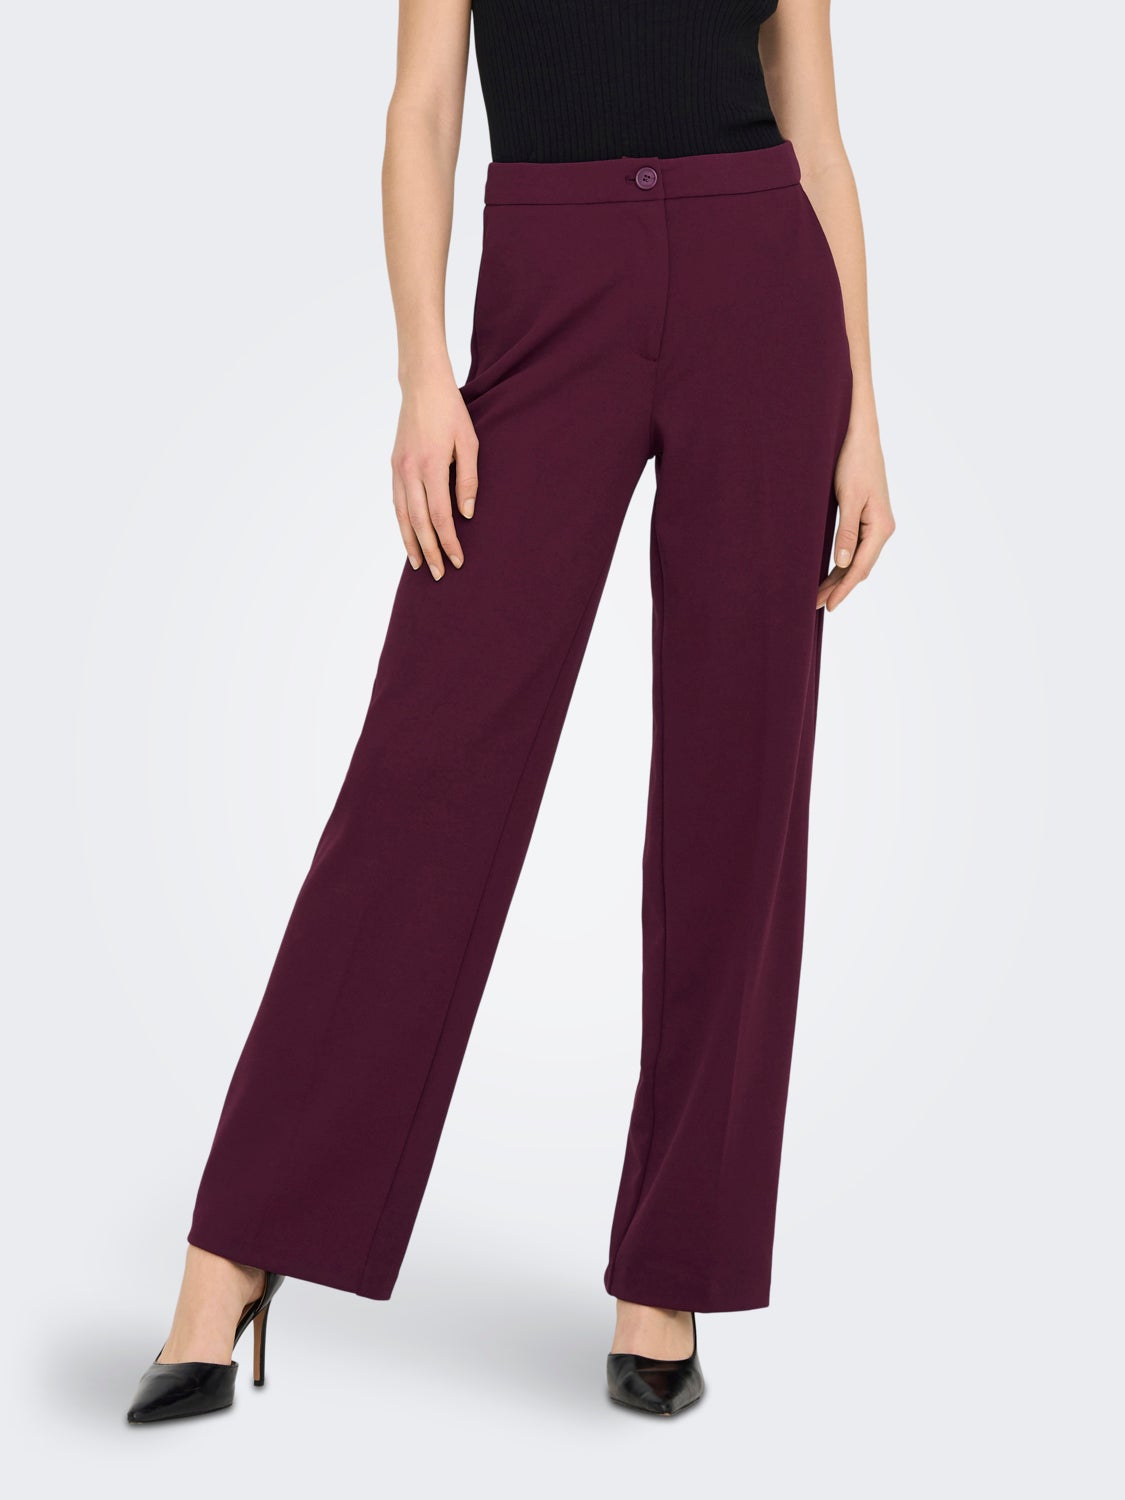 KIDS FASHION Trousers Knitted Zara slacks discount 91% Pink 3-6M 